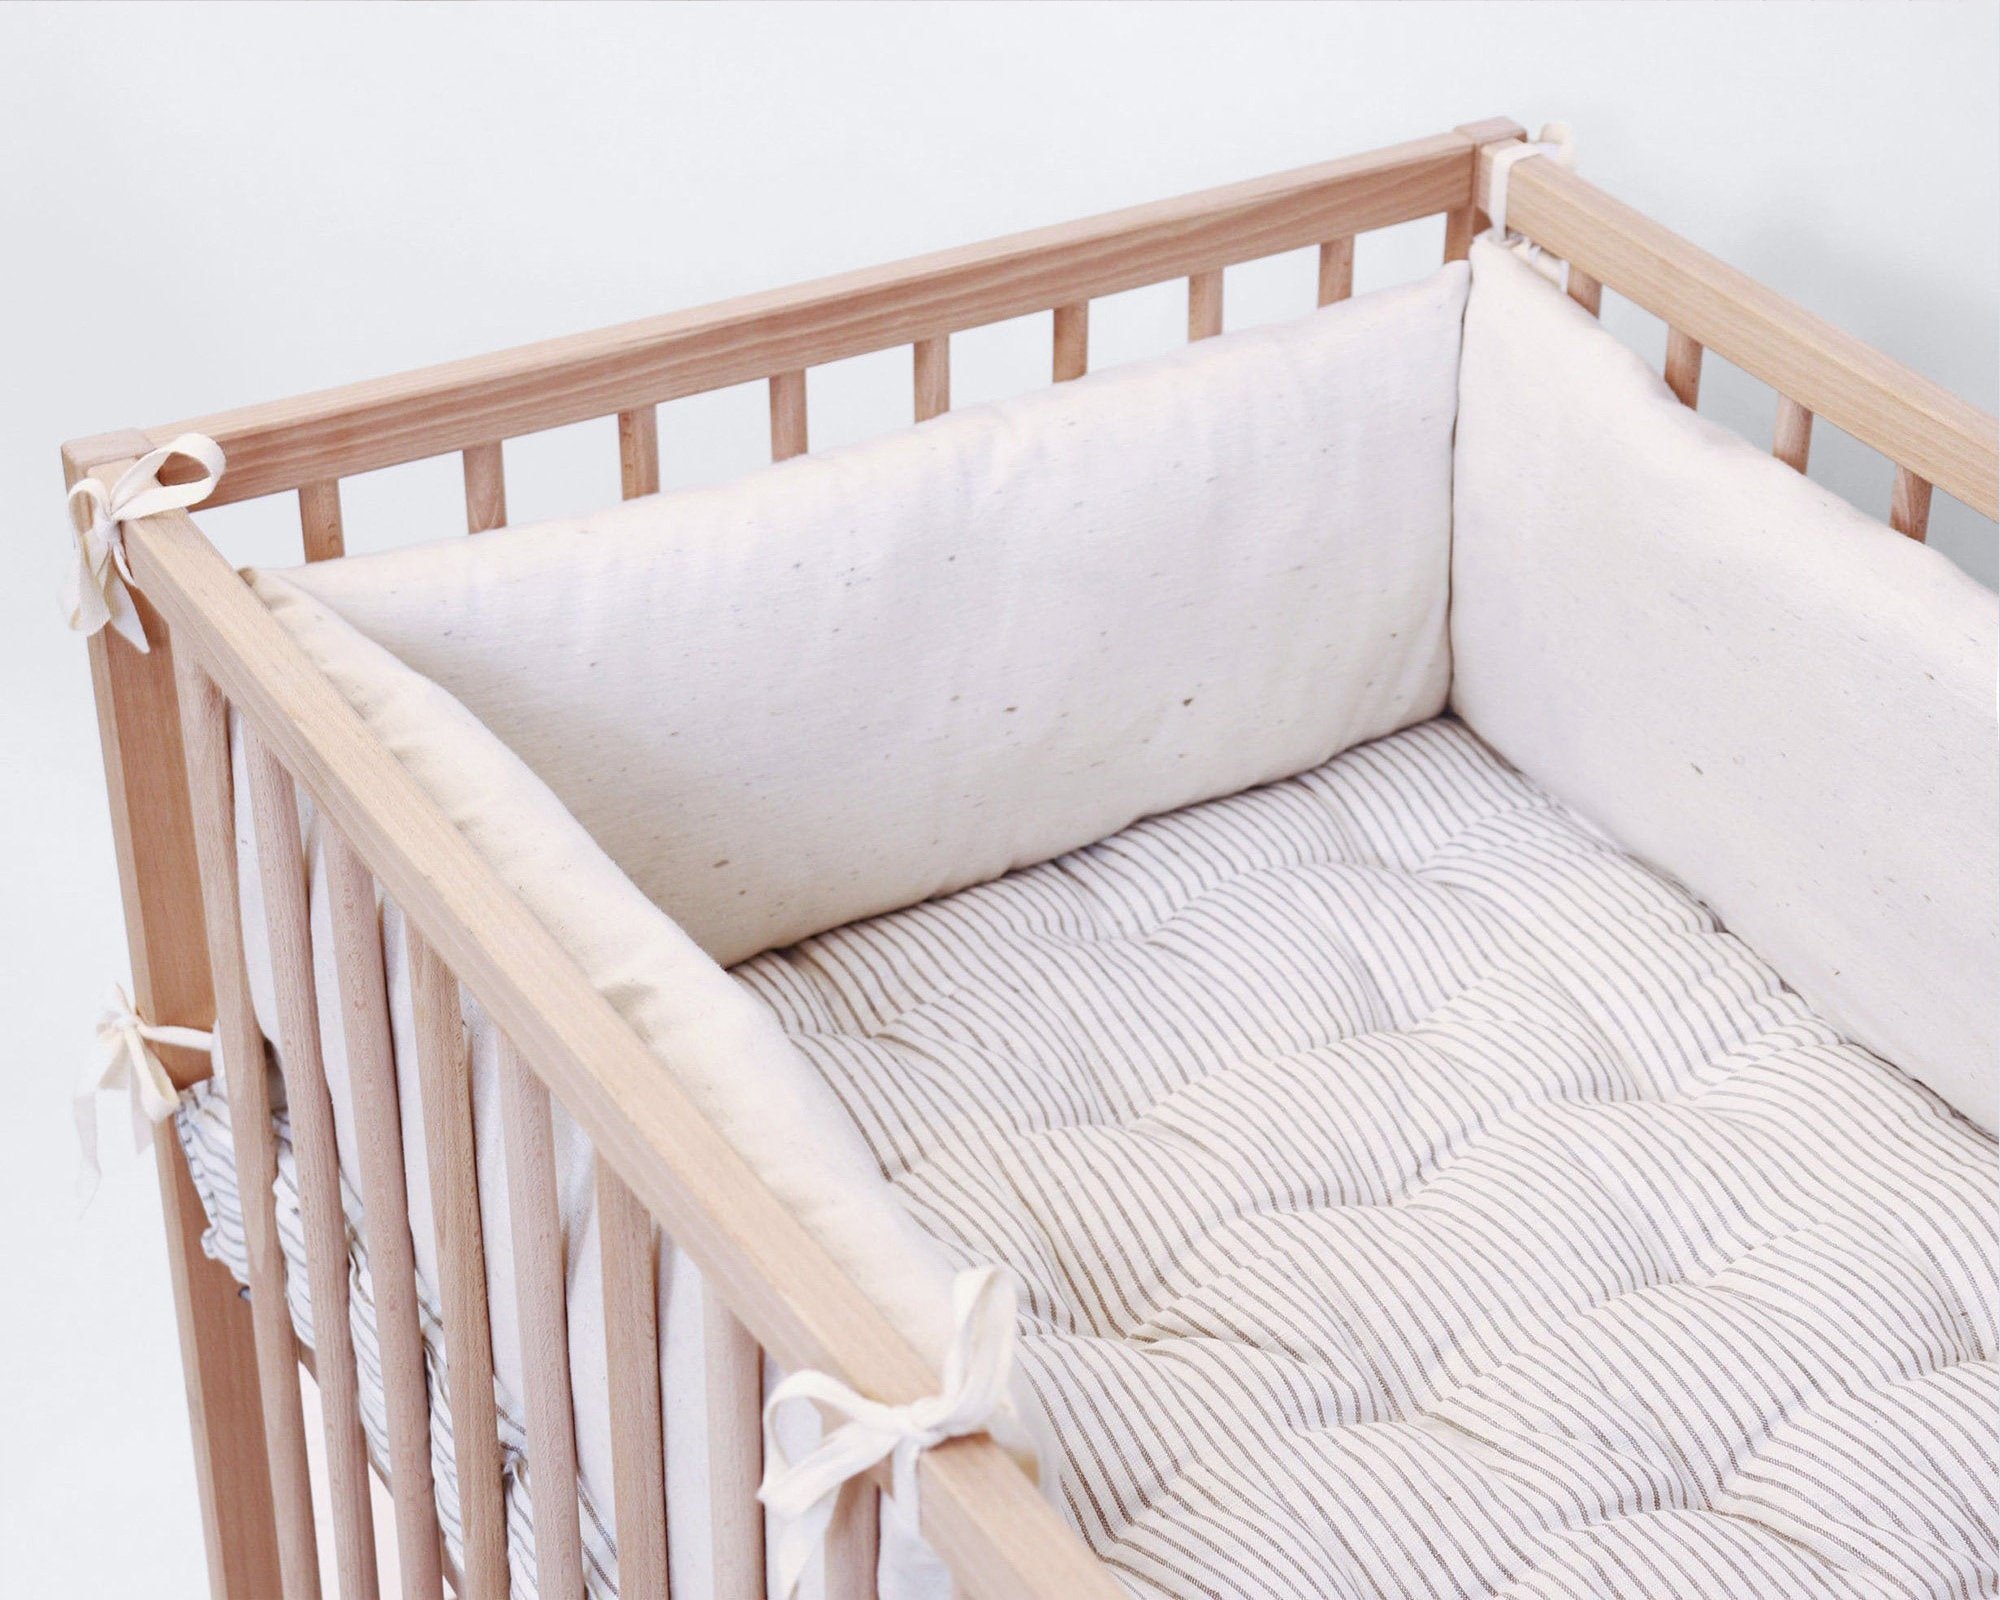 Baby crib mattress